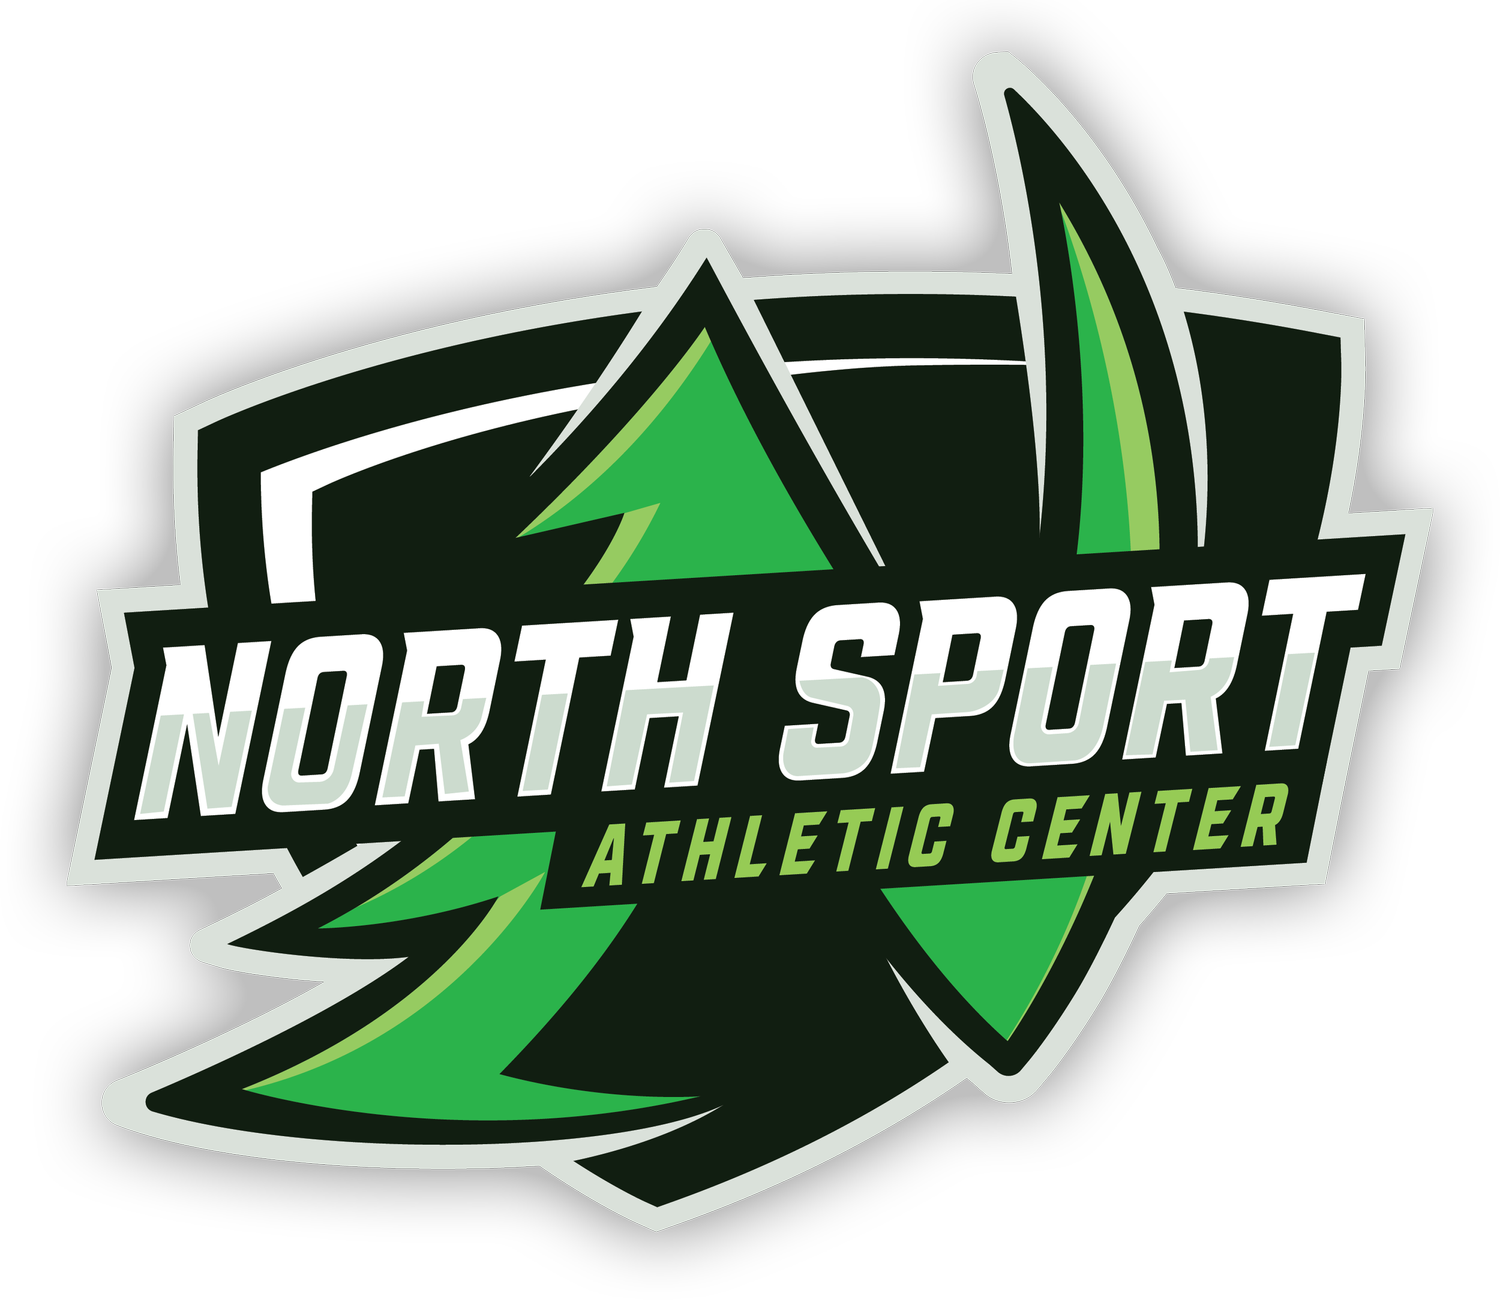 North Sport Athletic Center